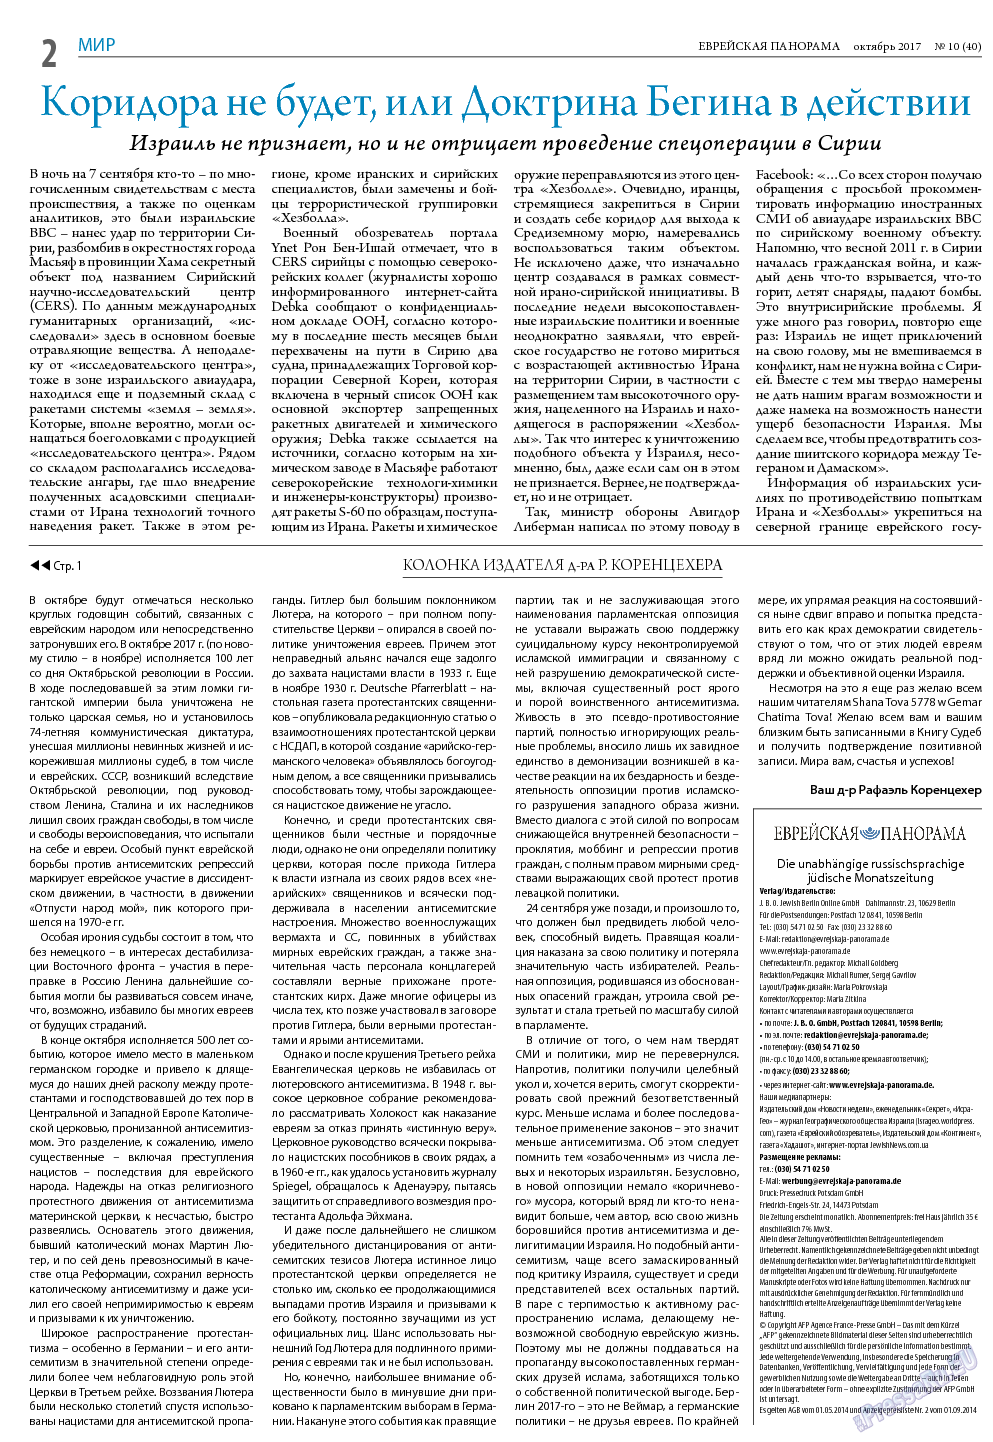 Еврейская панорама, газета. 2017 №10 стр.2